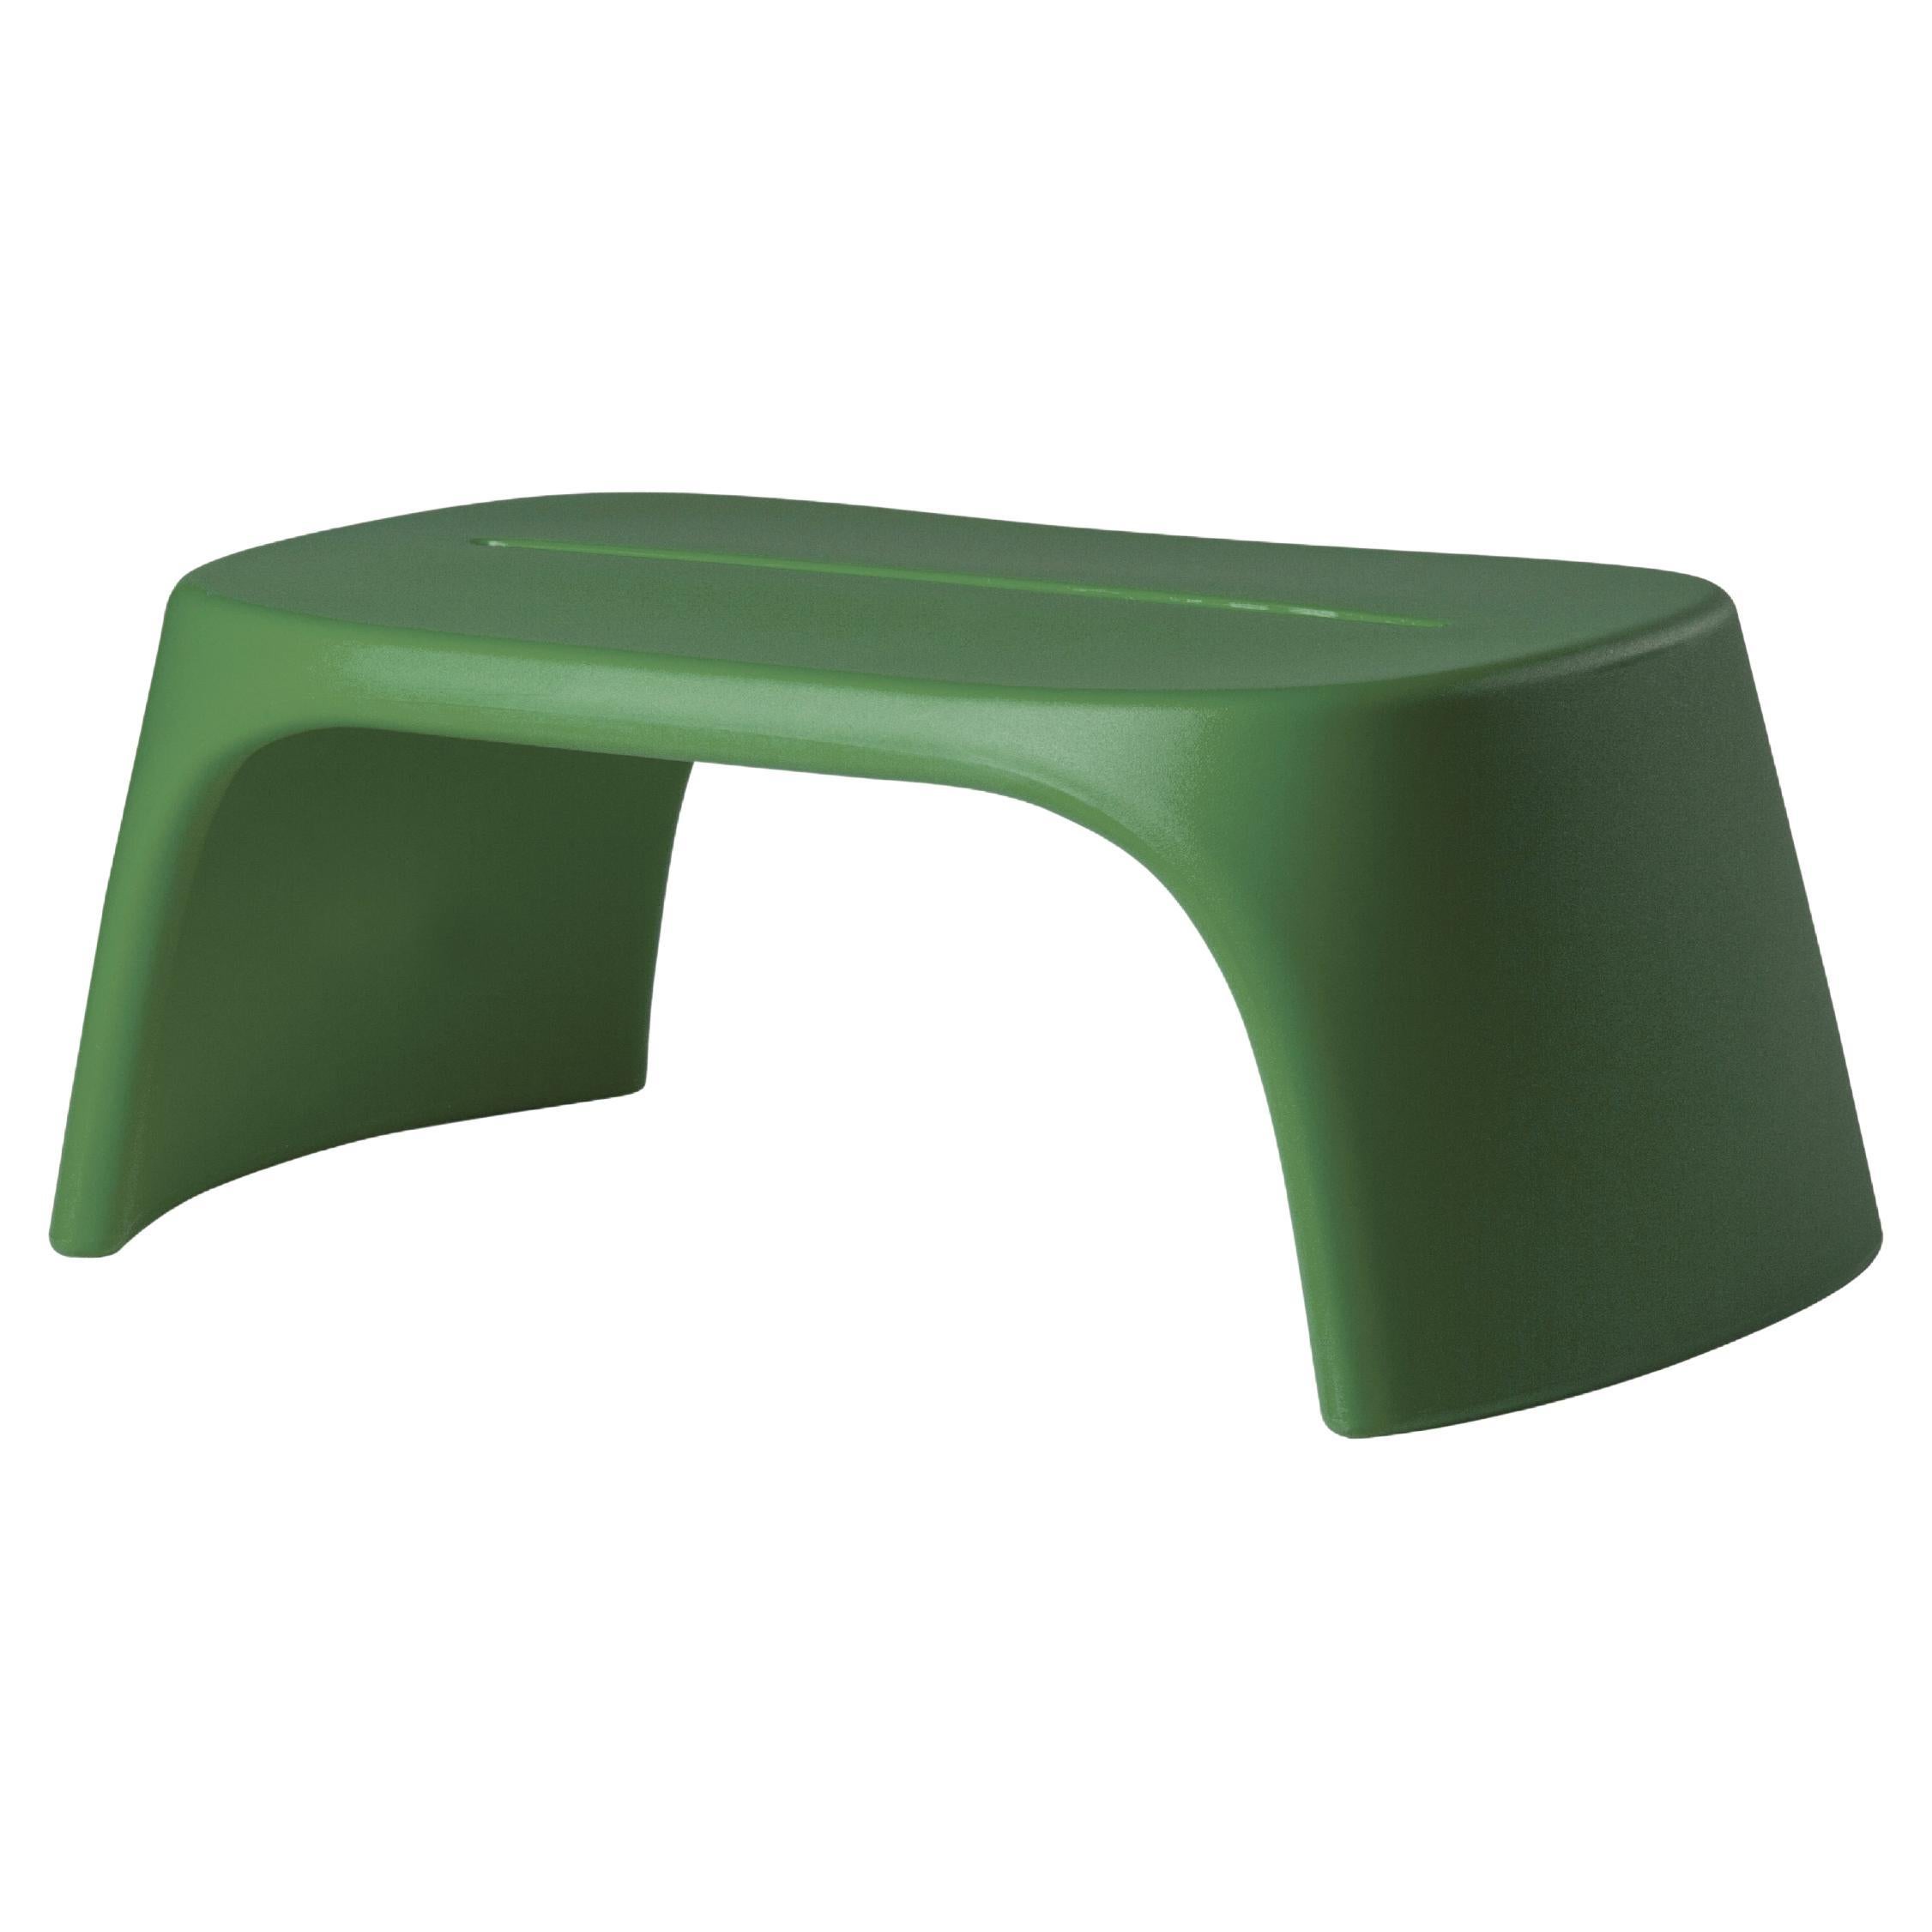 Slide Design Amélie Panchetta Bench in Malva Green by Italo Pertichini For Sale